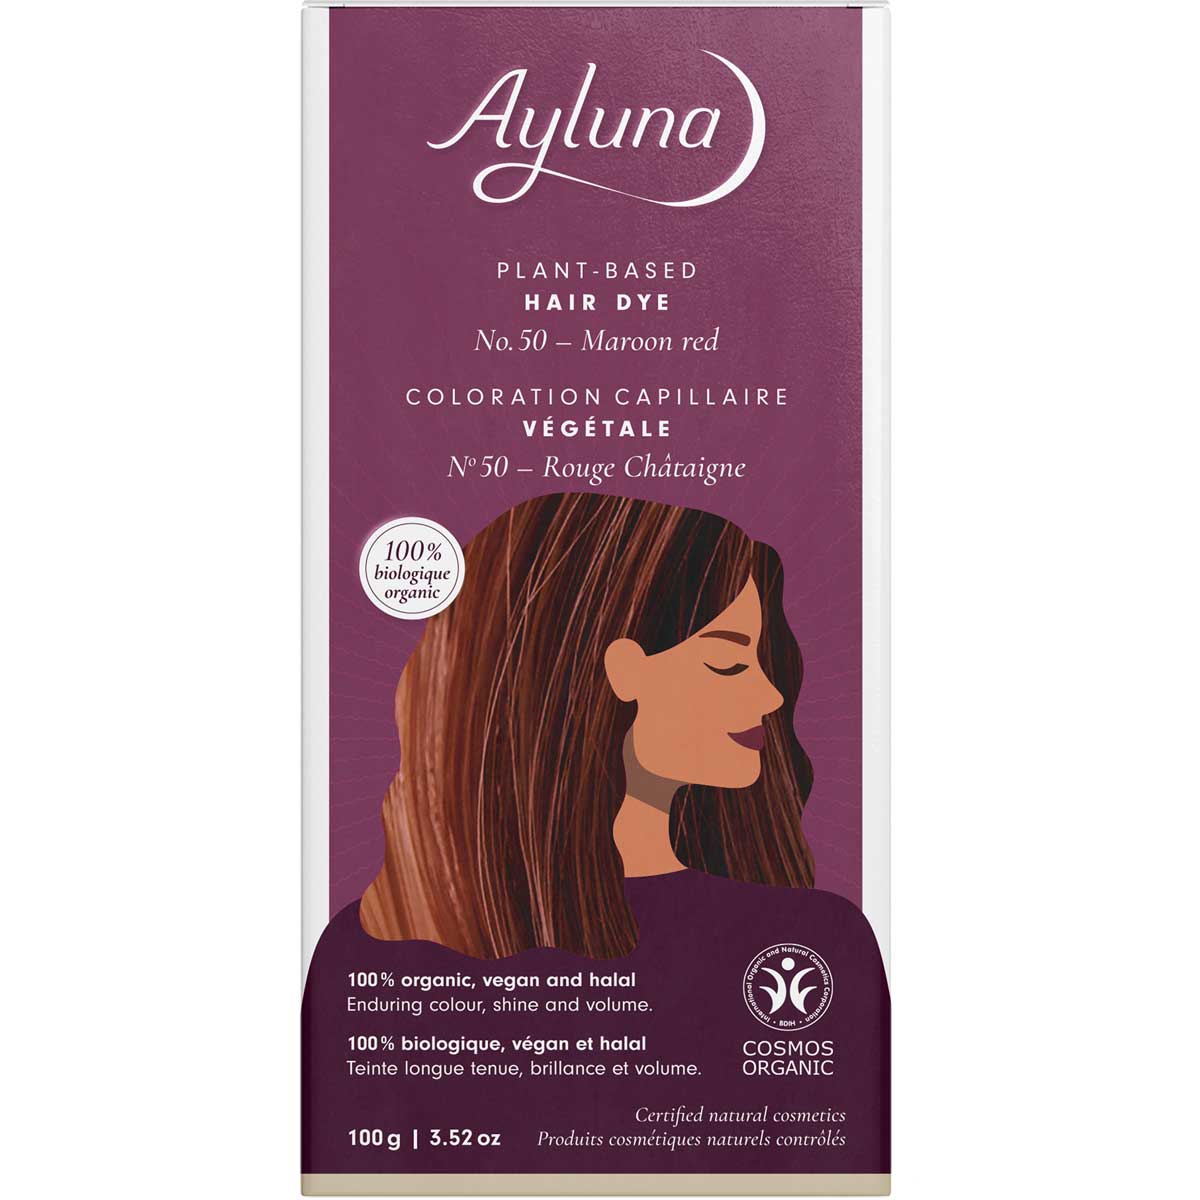 Ayluna Maroon Red No.50 Plant-Based Hair Dye 100g